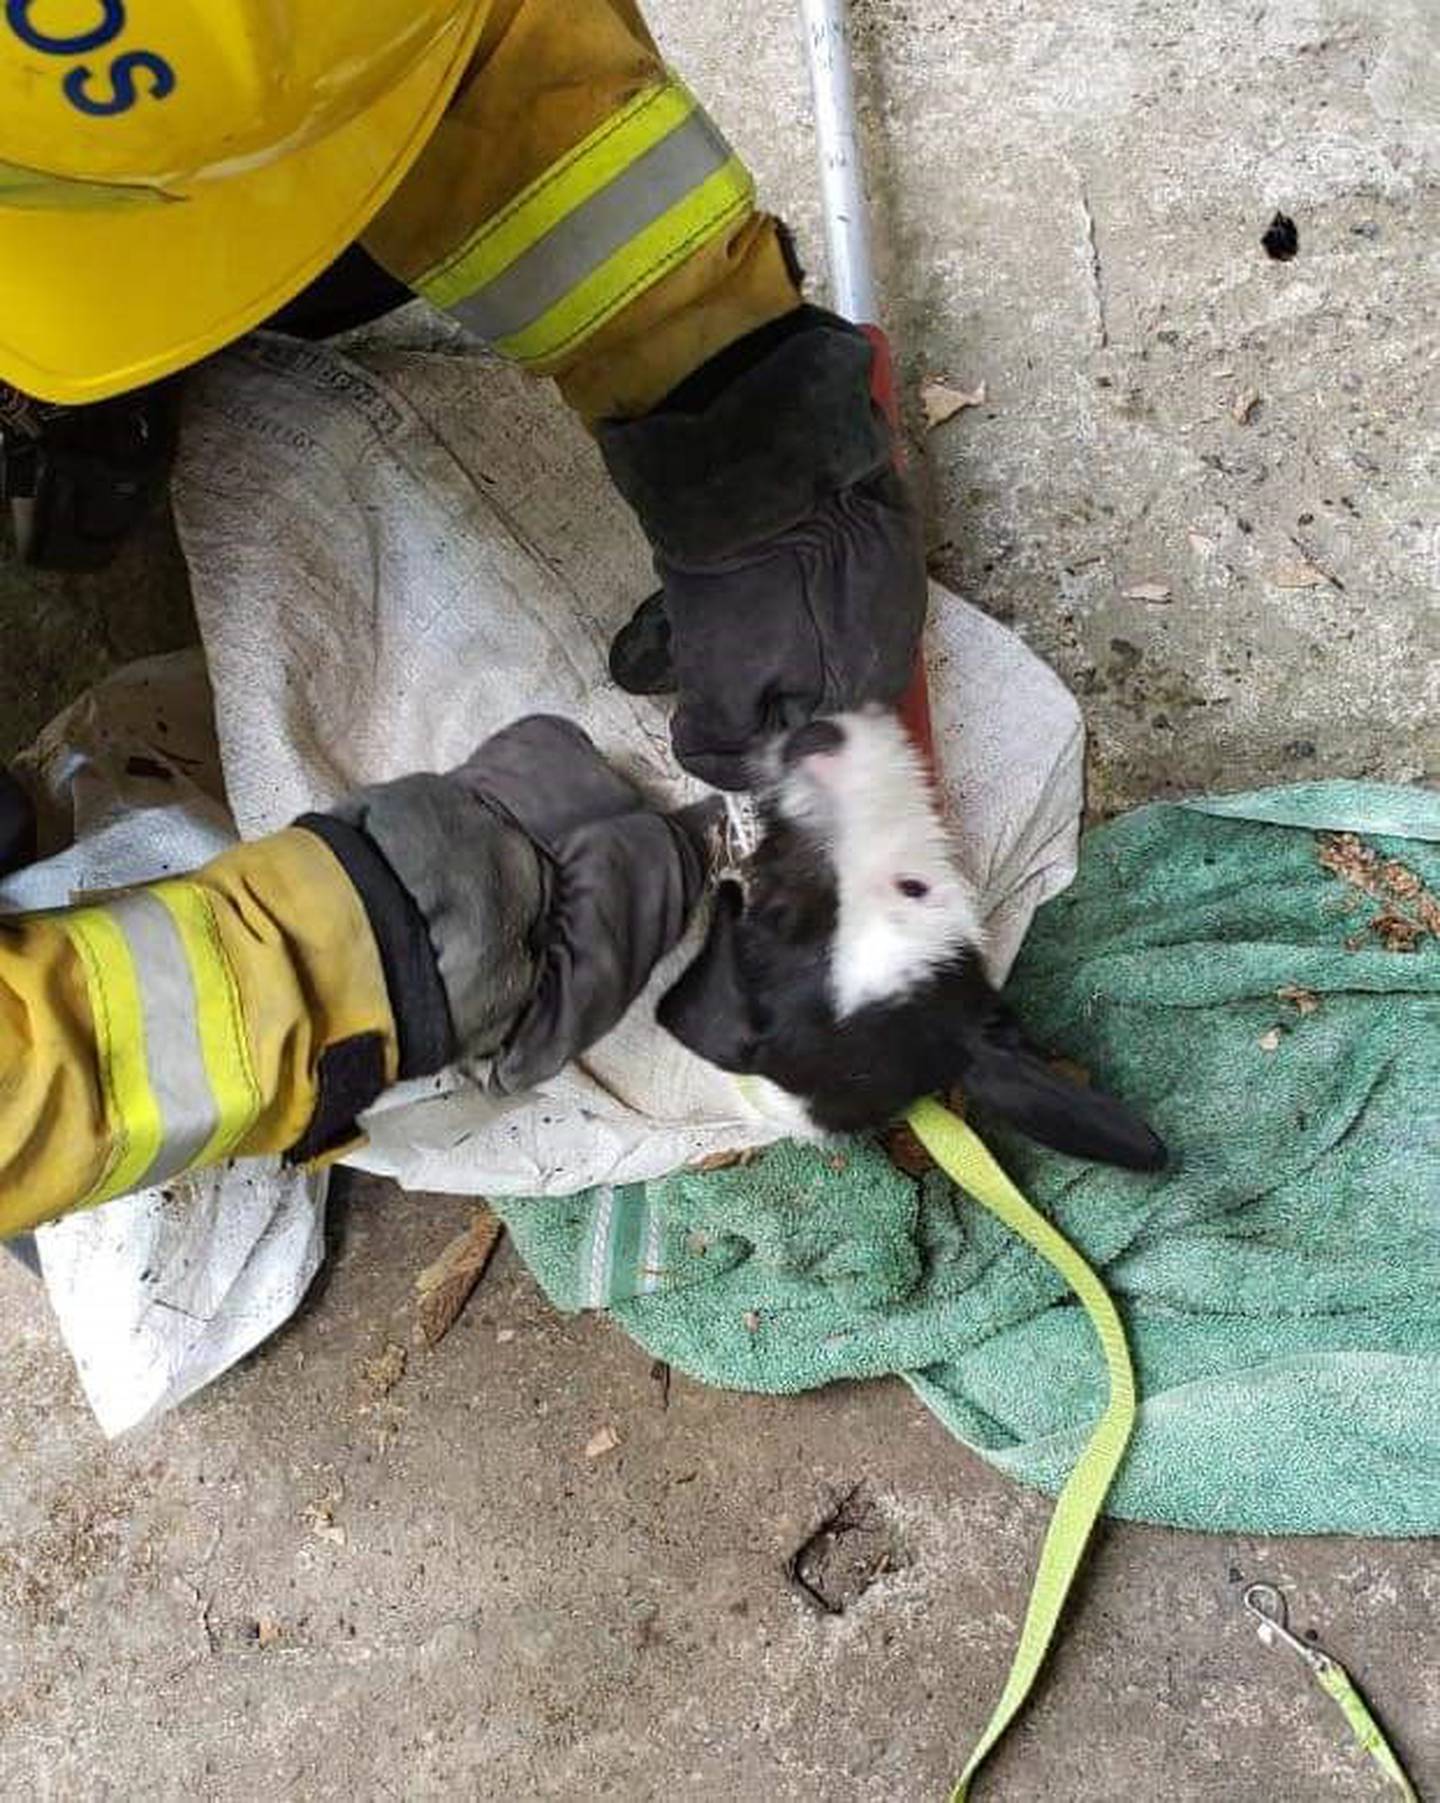 Bomberos rescatan a perro que fue lanzado dentro de un saco a río Ocloro. Foto Bomberos.